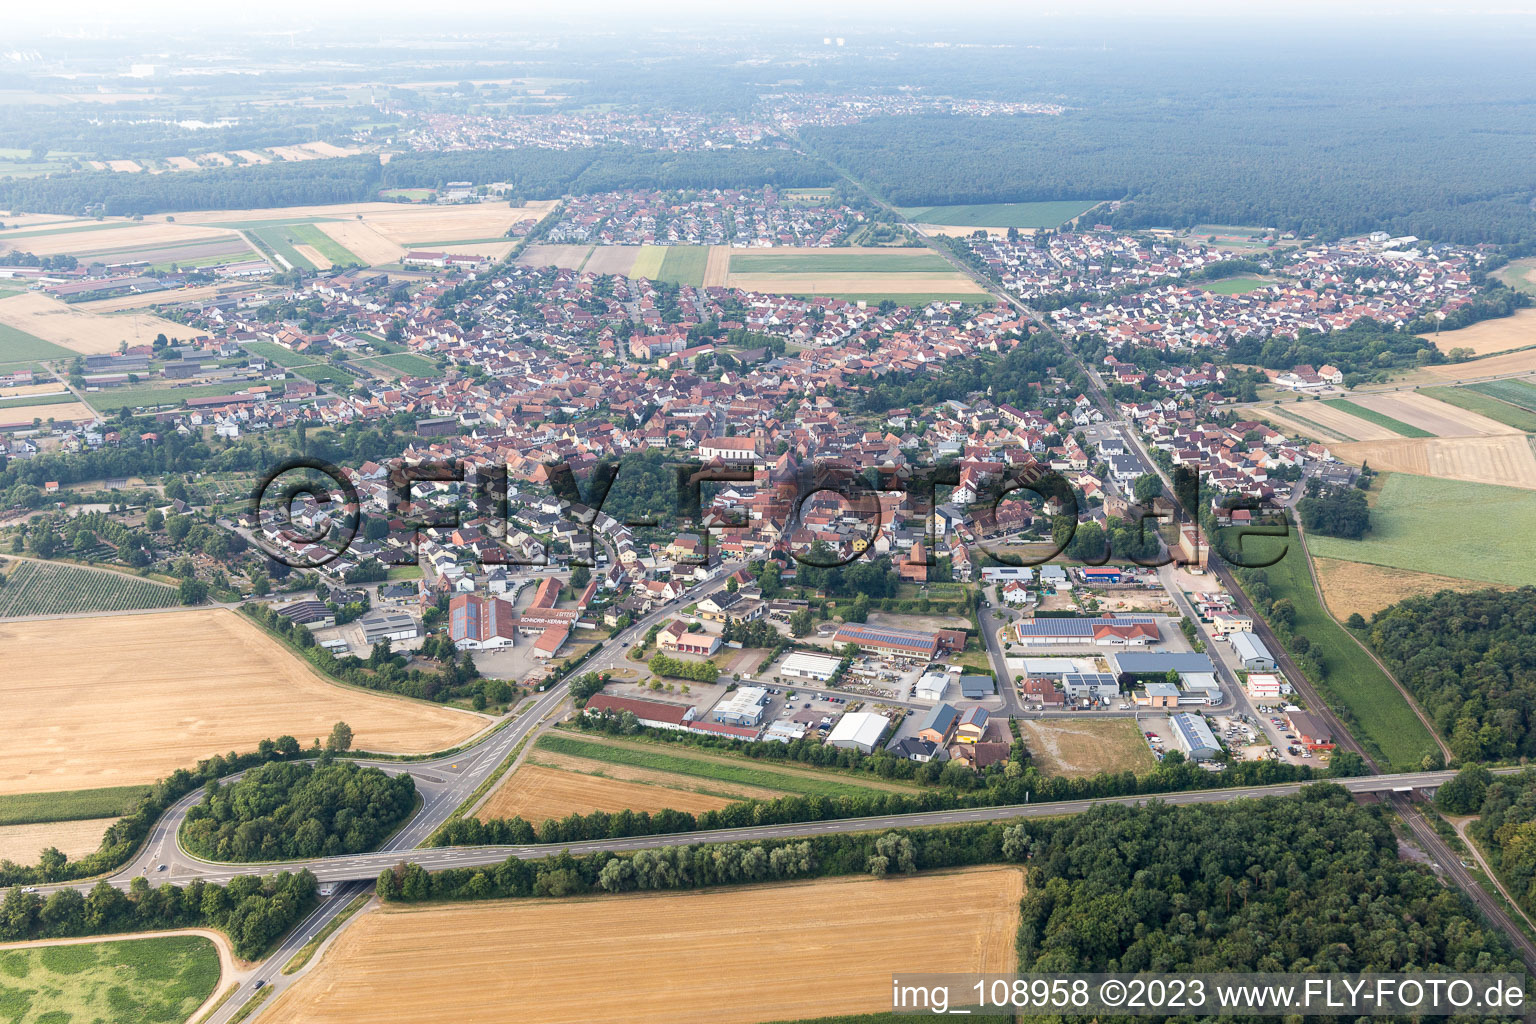 Rheinzabern in the state Rhineland-Palatinate, Germany seen from a drone